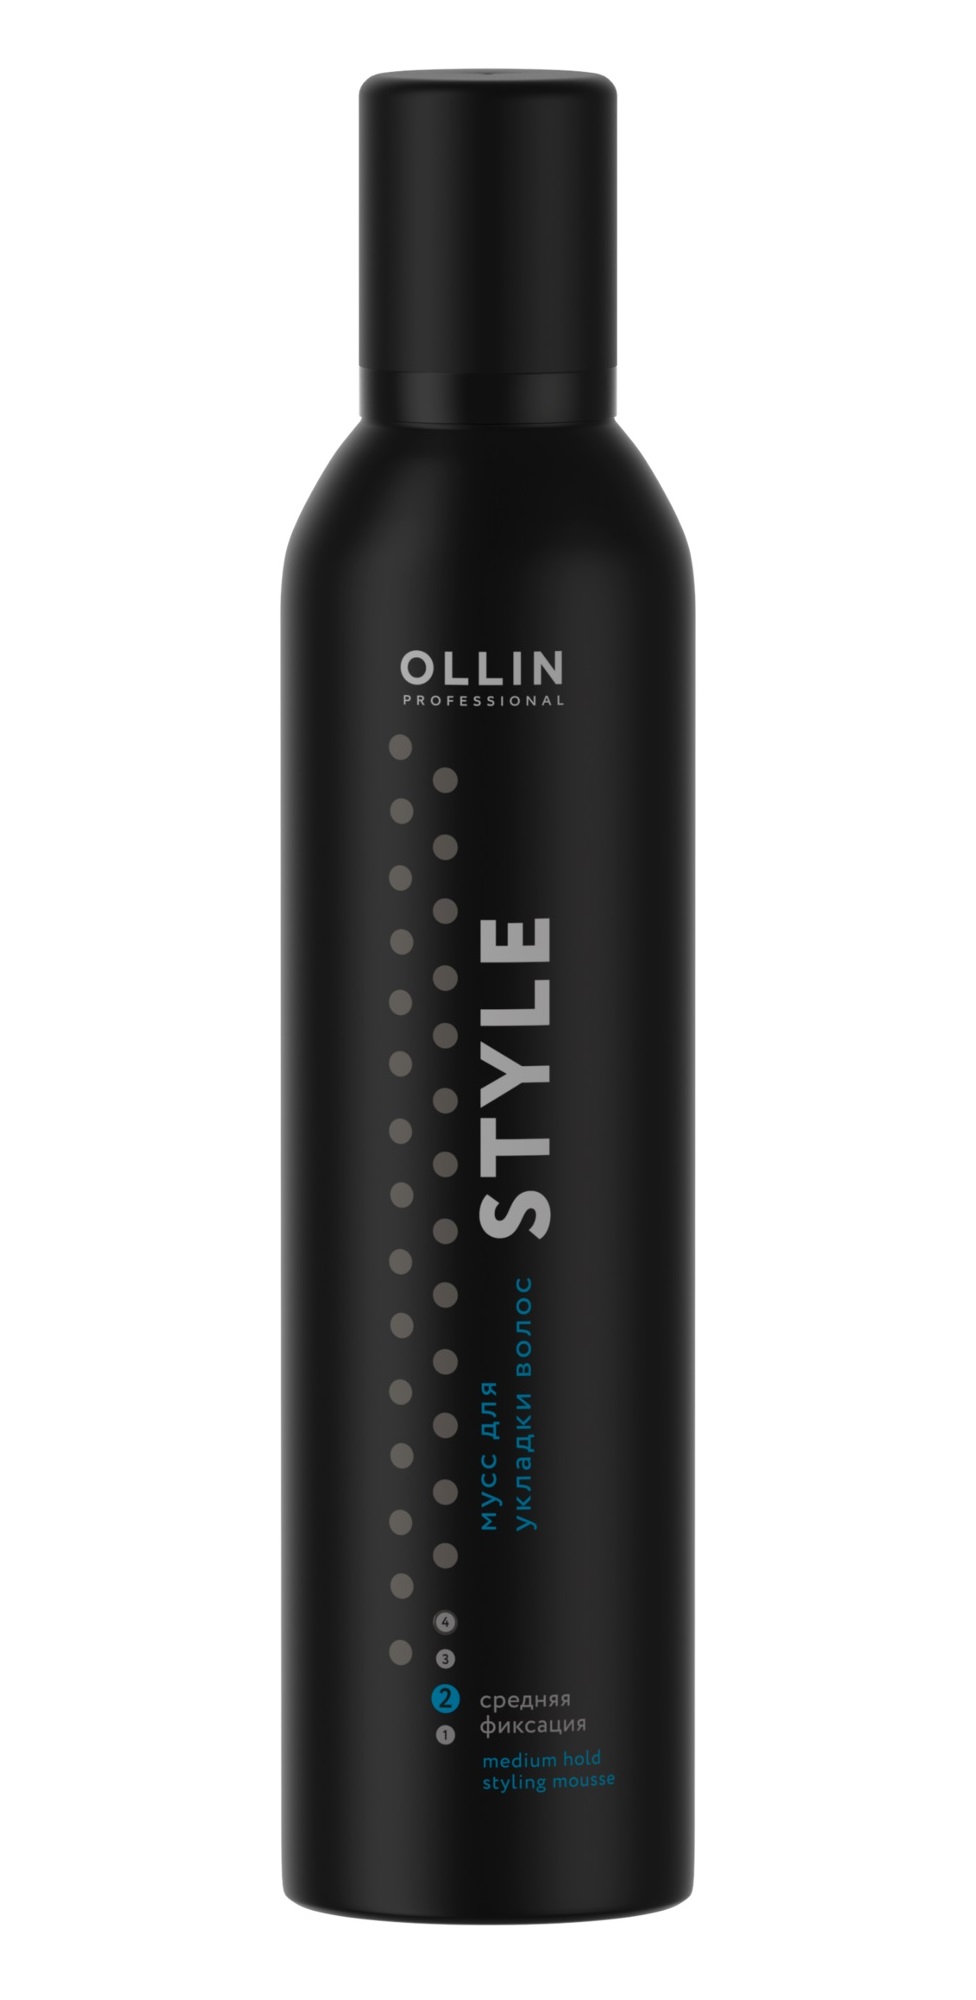 Ollin Professional Мусс для укладки волос средней фиксации, 250 мл (Ollin Professional, Style)